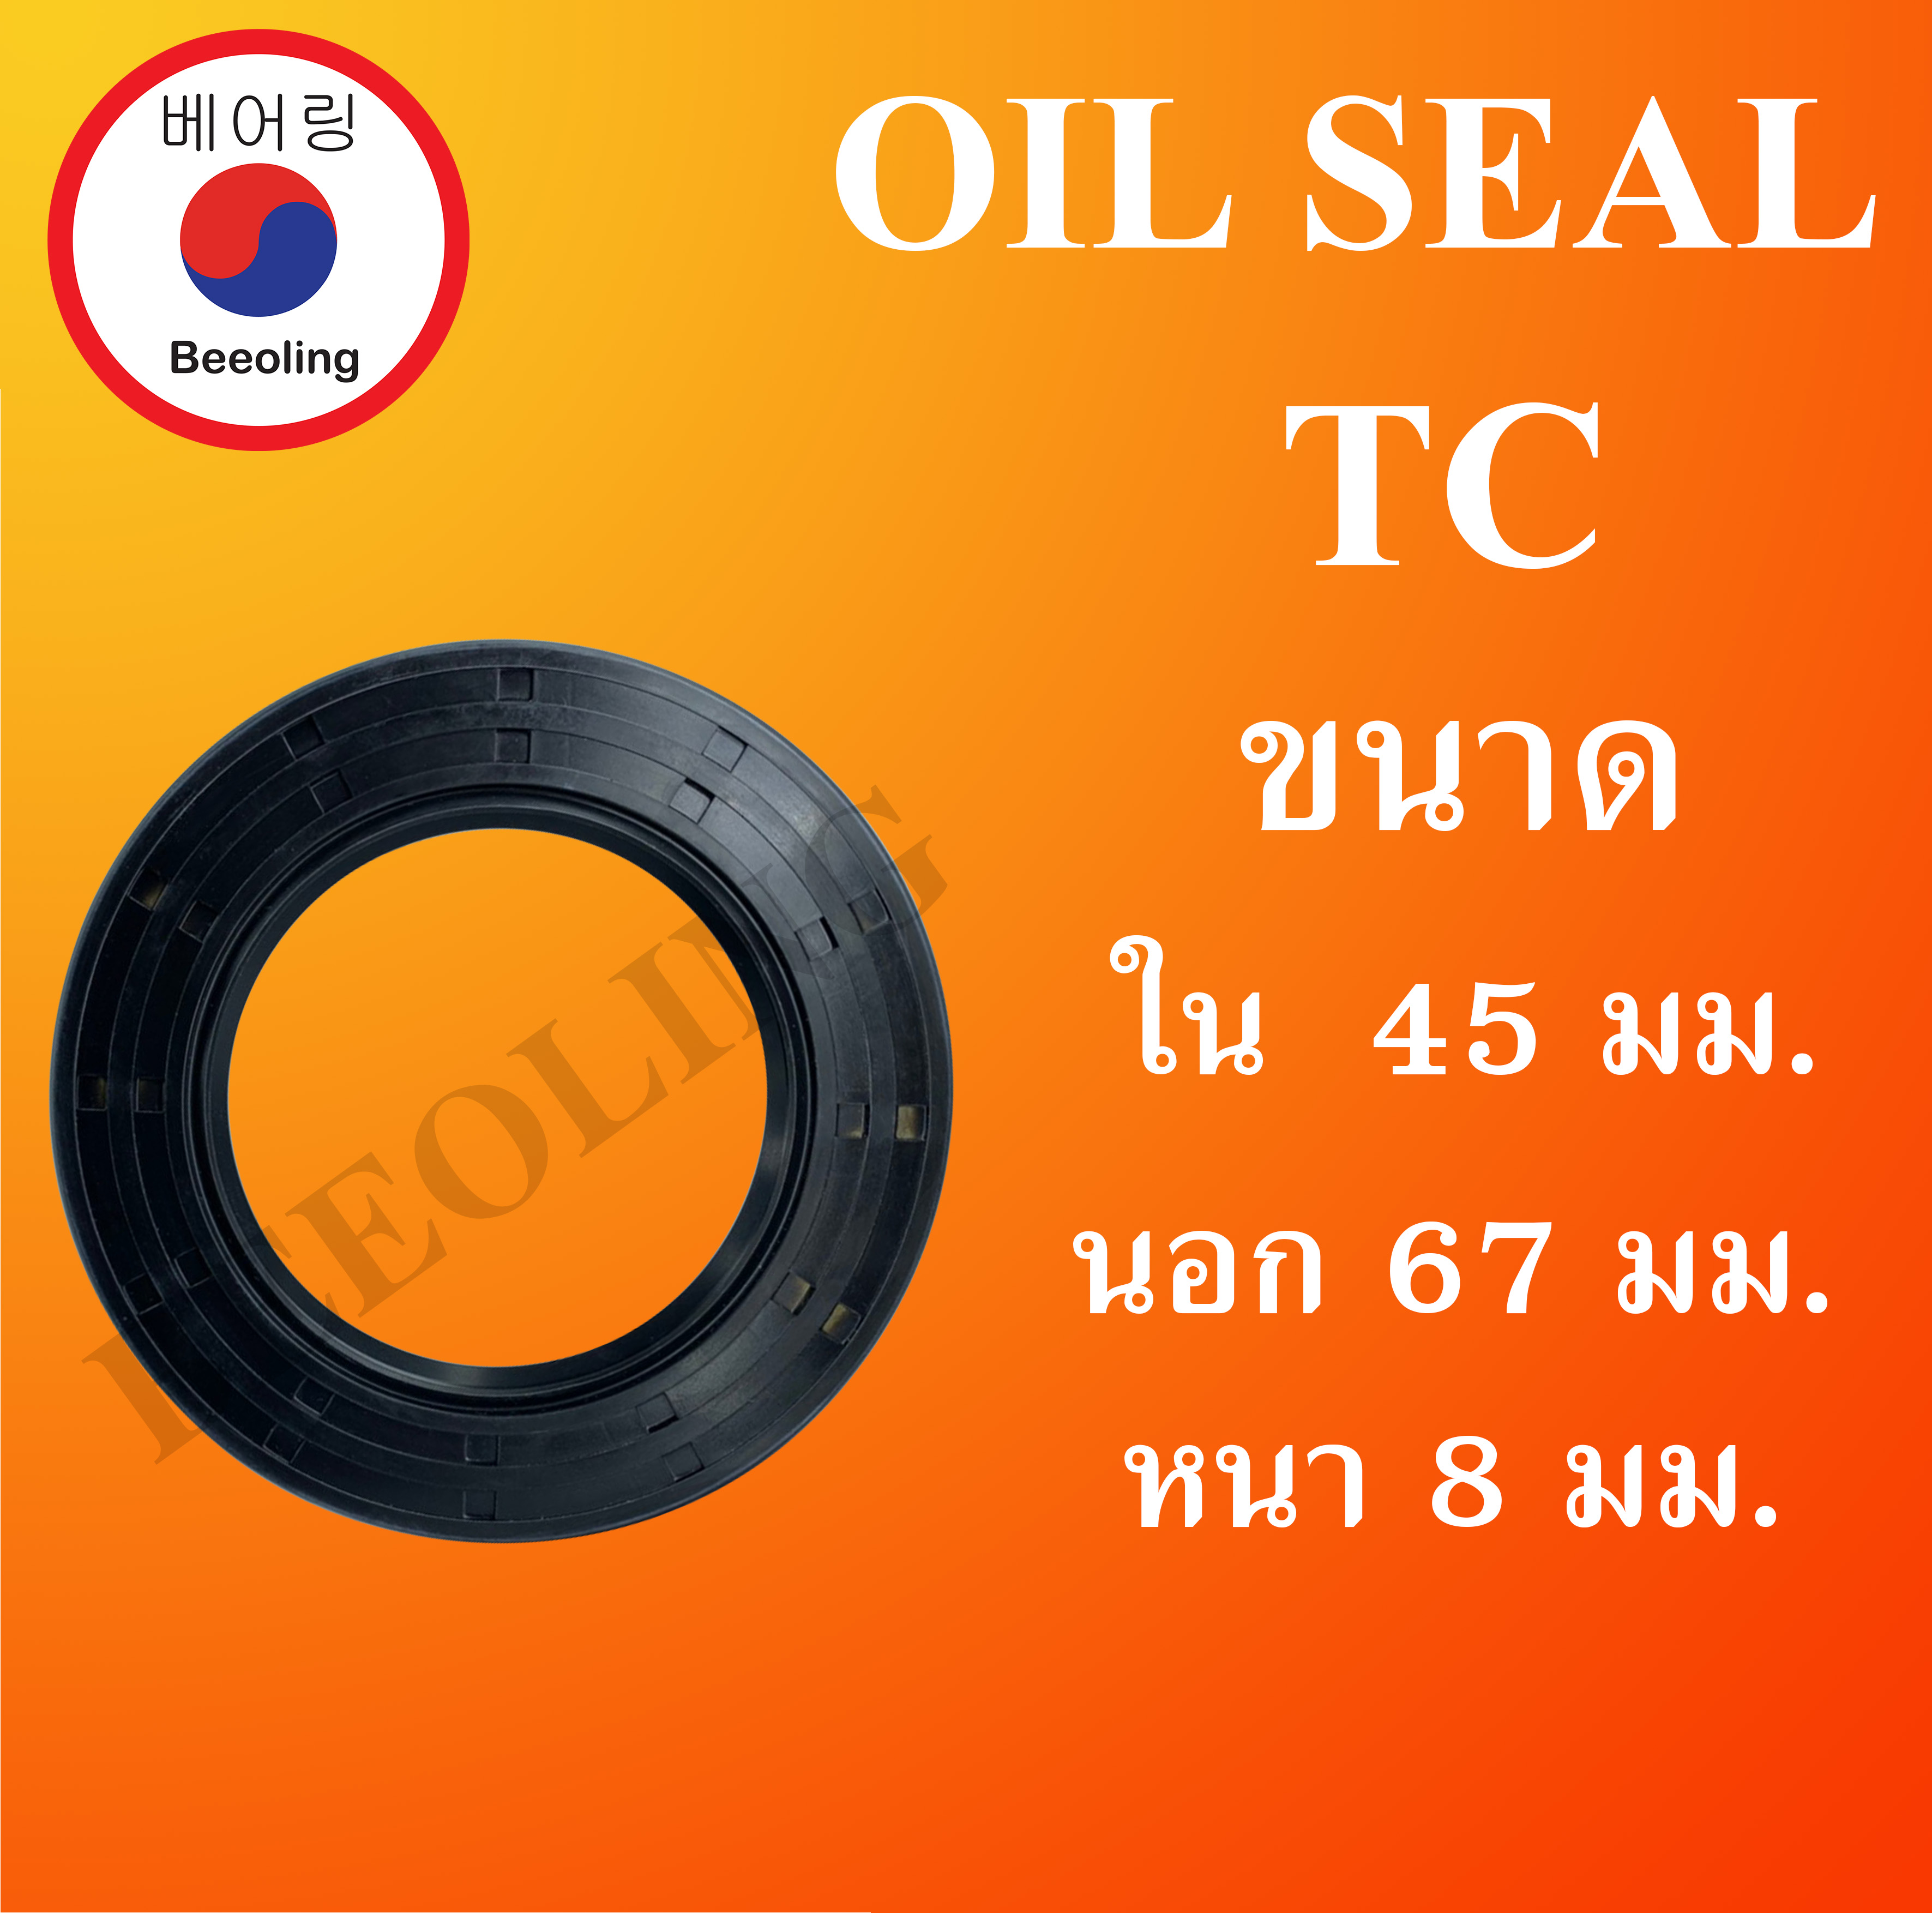 TC45-67-8 ออยซีล ซีลยาง ซีลกันน้ำมัน ซีลกันซึม ซีลกันฝุ่น Oil seal ขนาด ใน 45 นอก 67 หนา 8 ( มม ) TC 45-67-8 โดย Beeoling shop